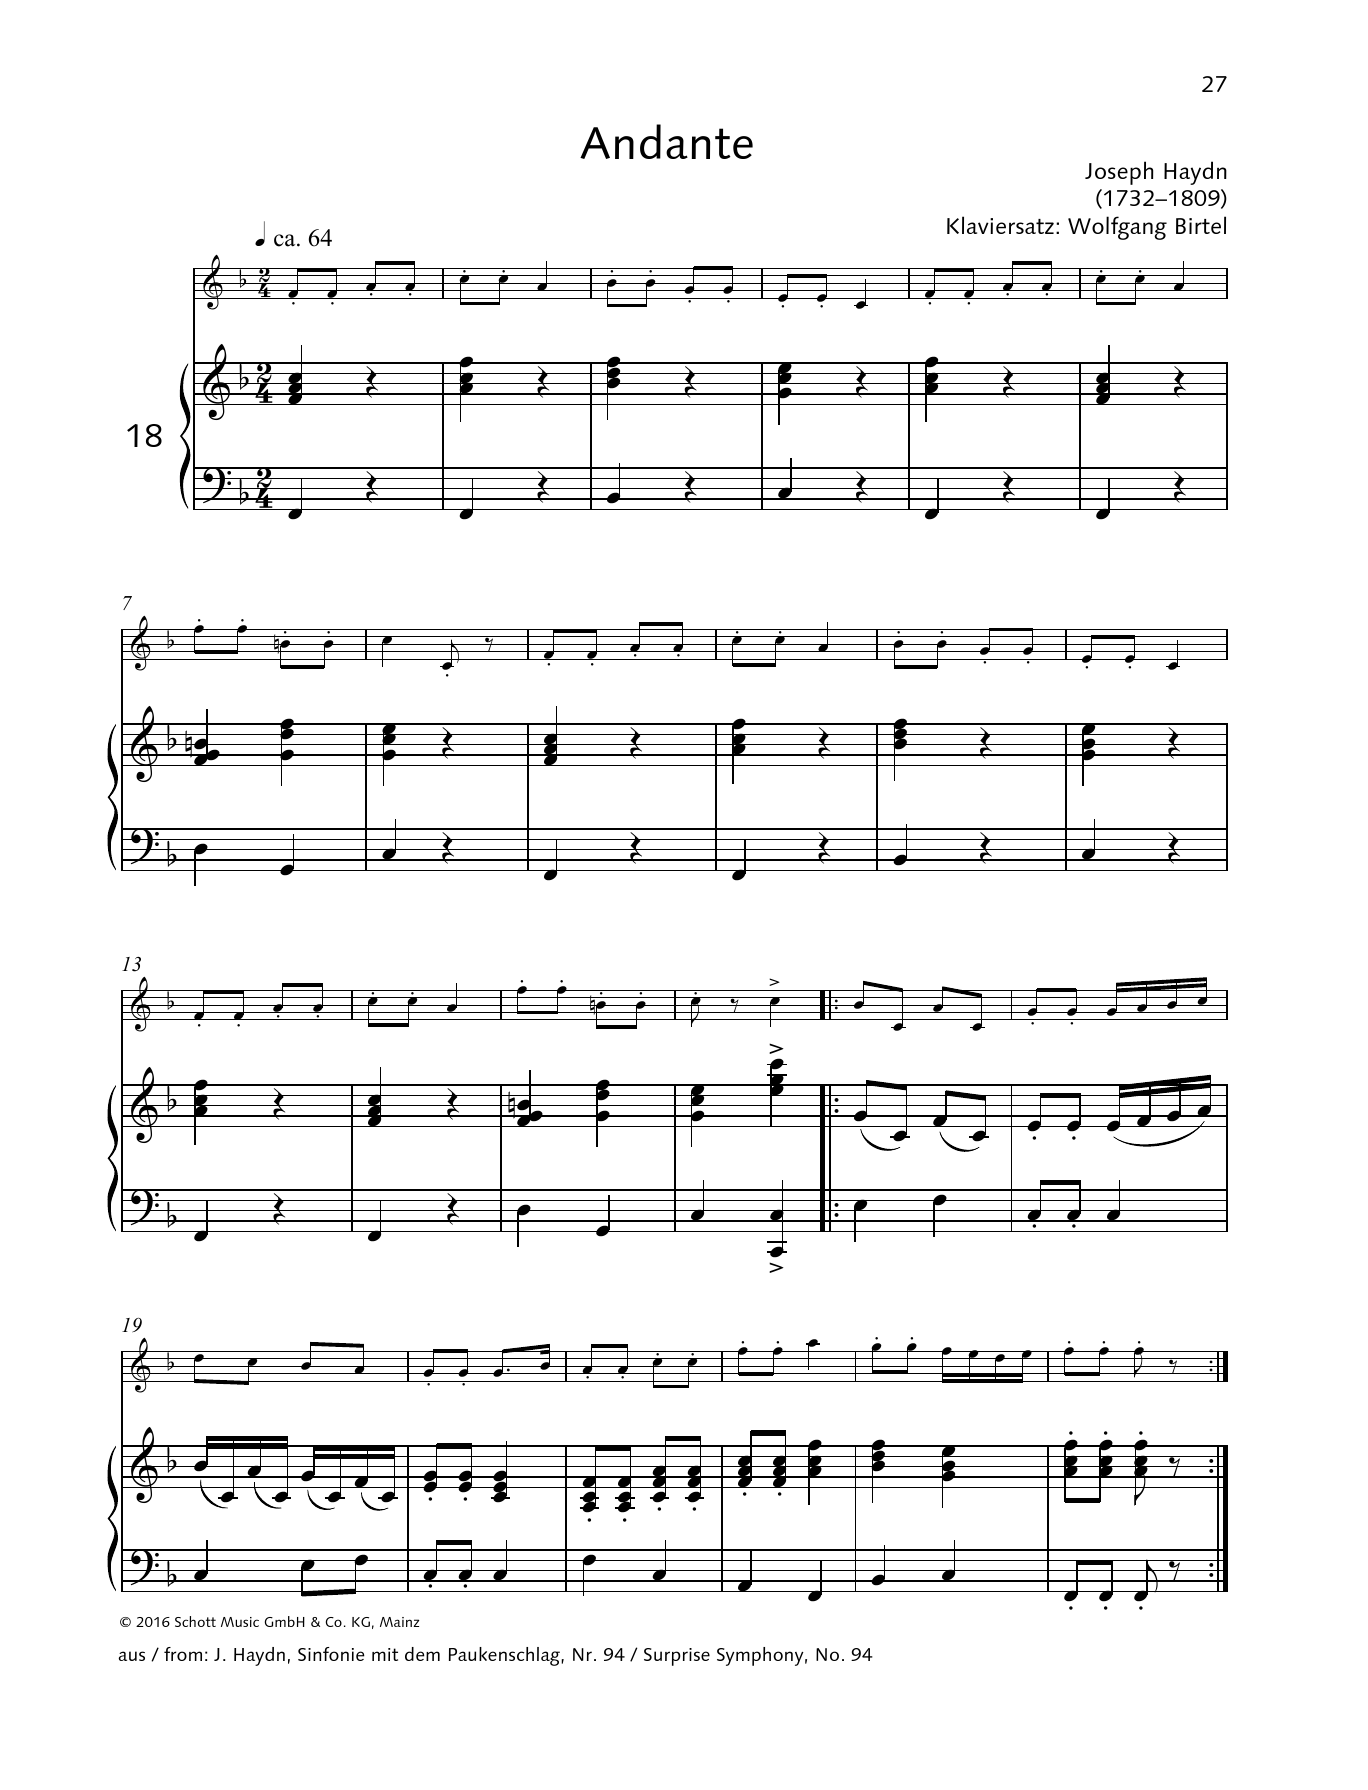 Download Joseph Haydn Andante Sheet Music